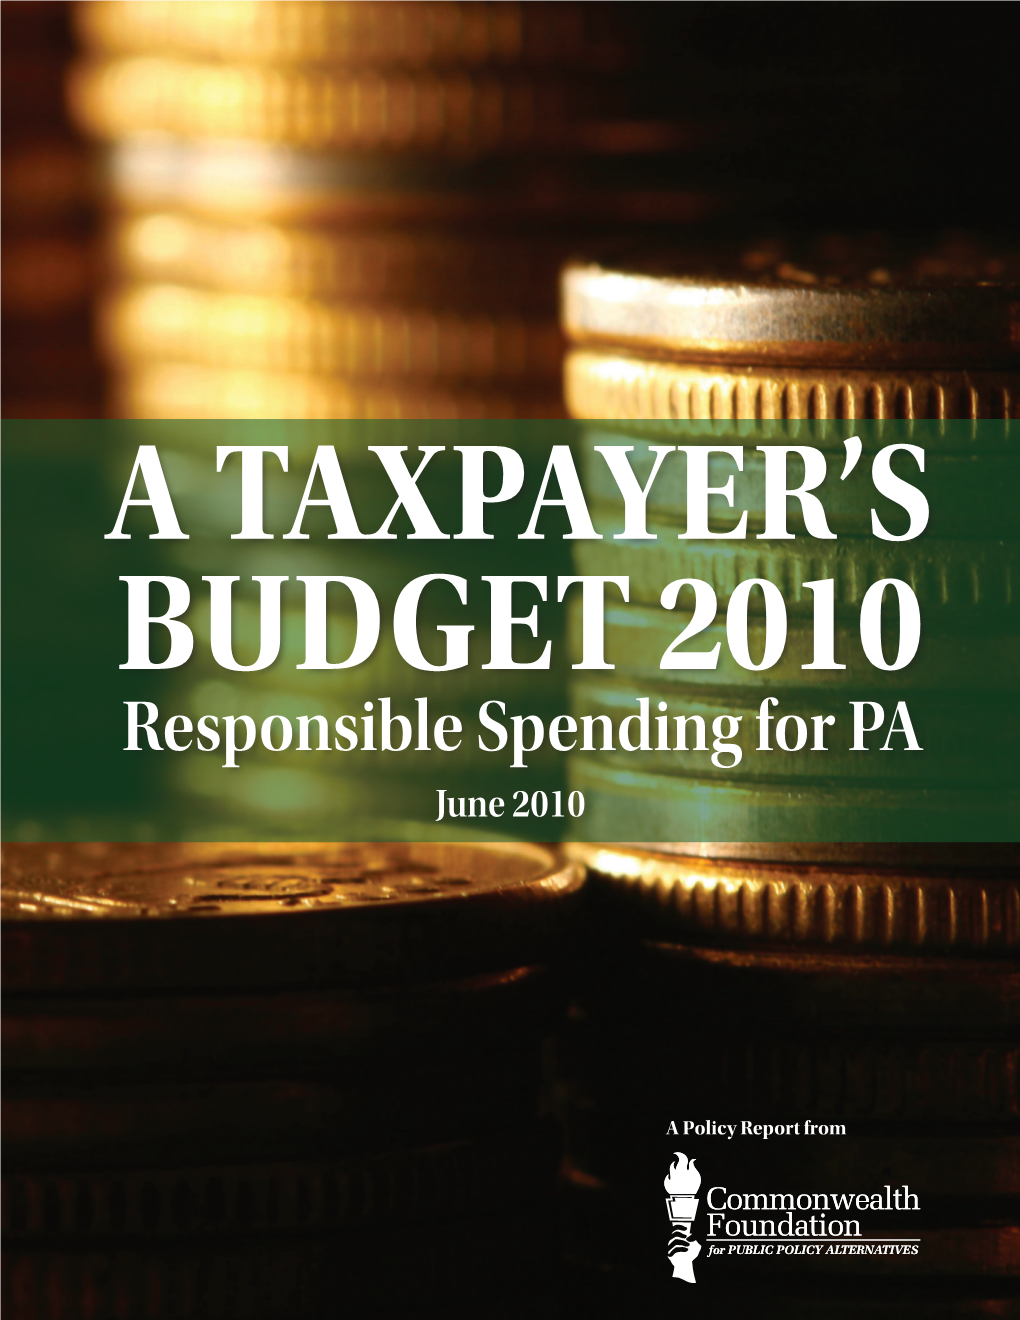 Responsible Spending for PA June 2010